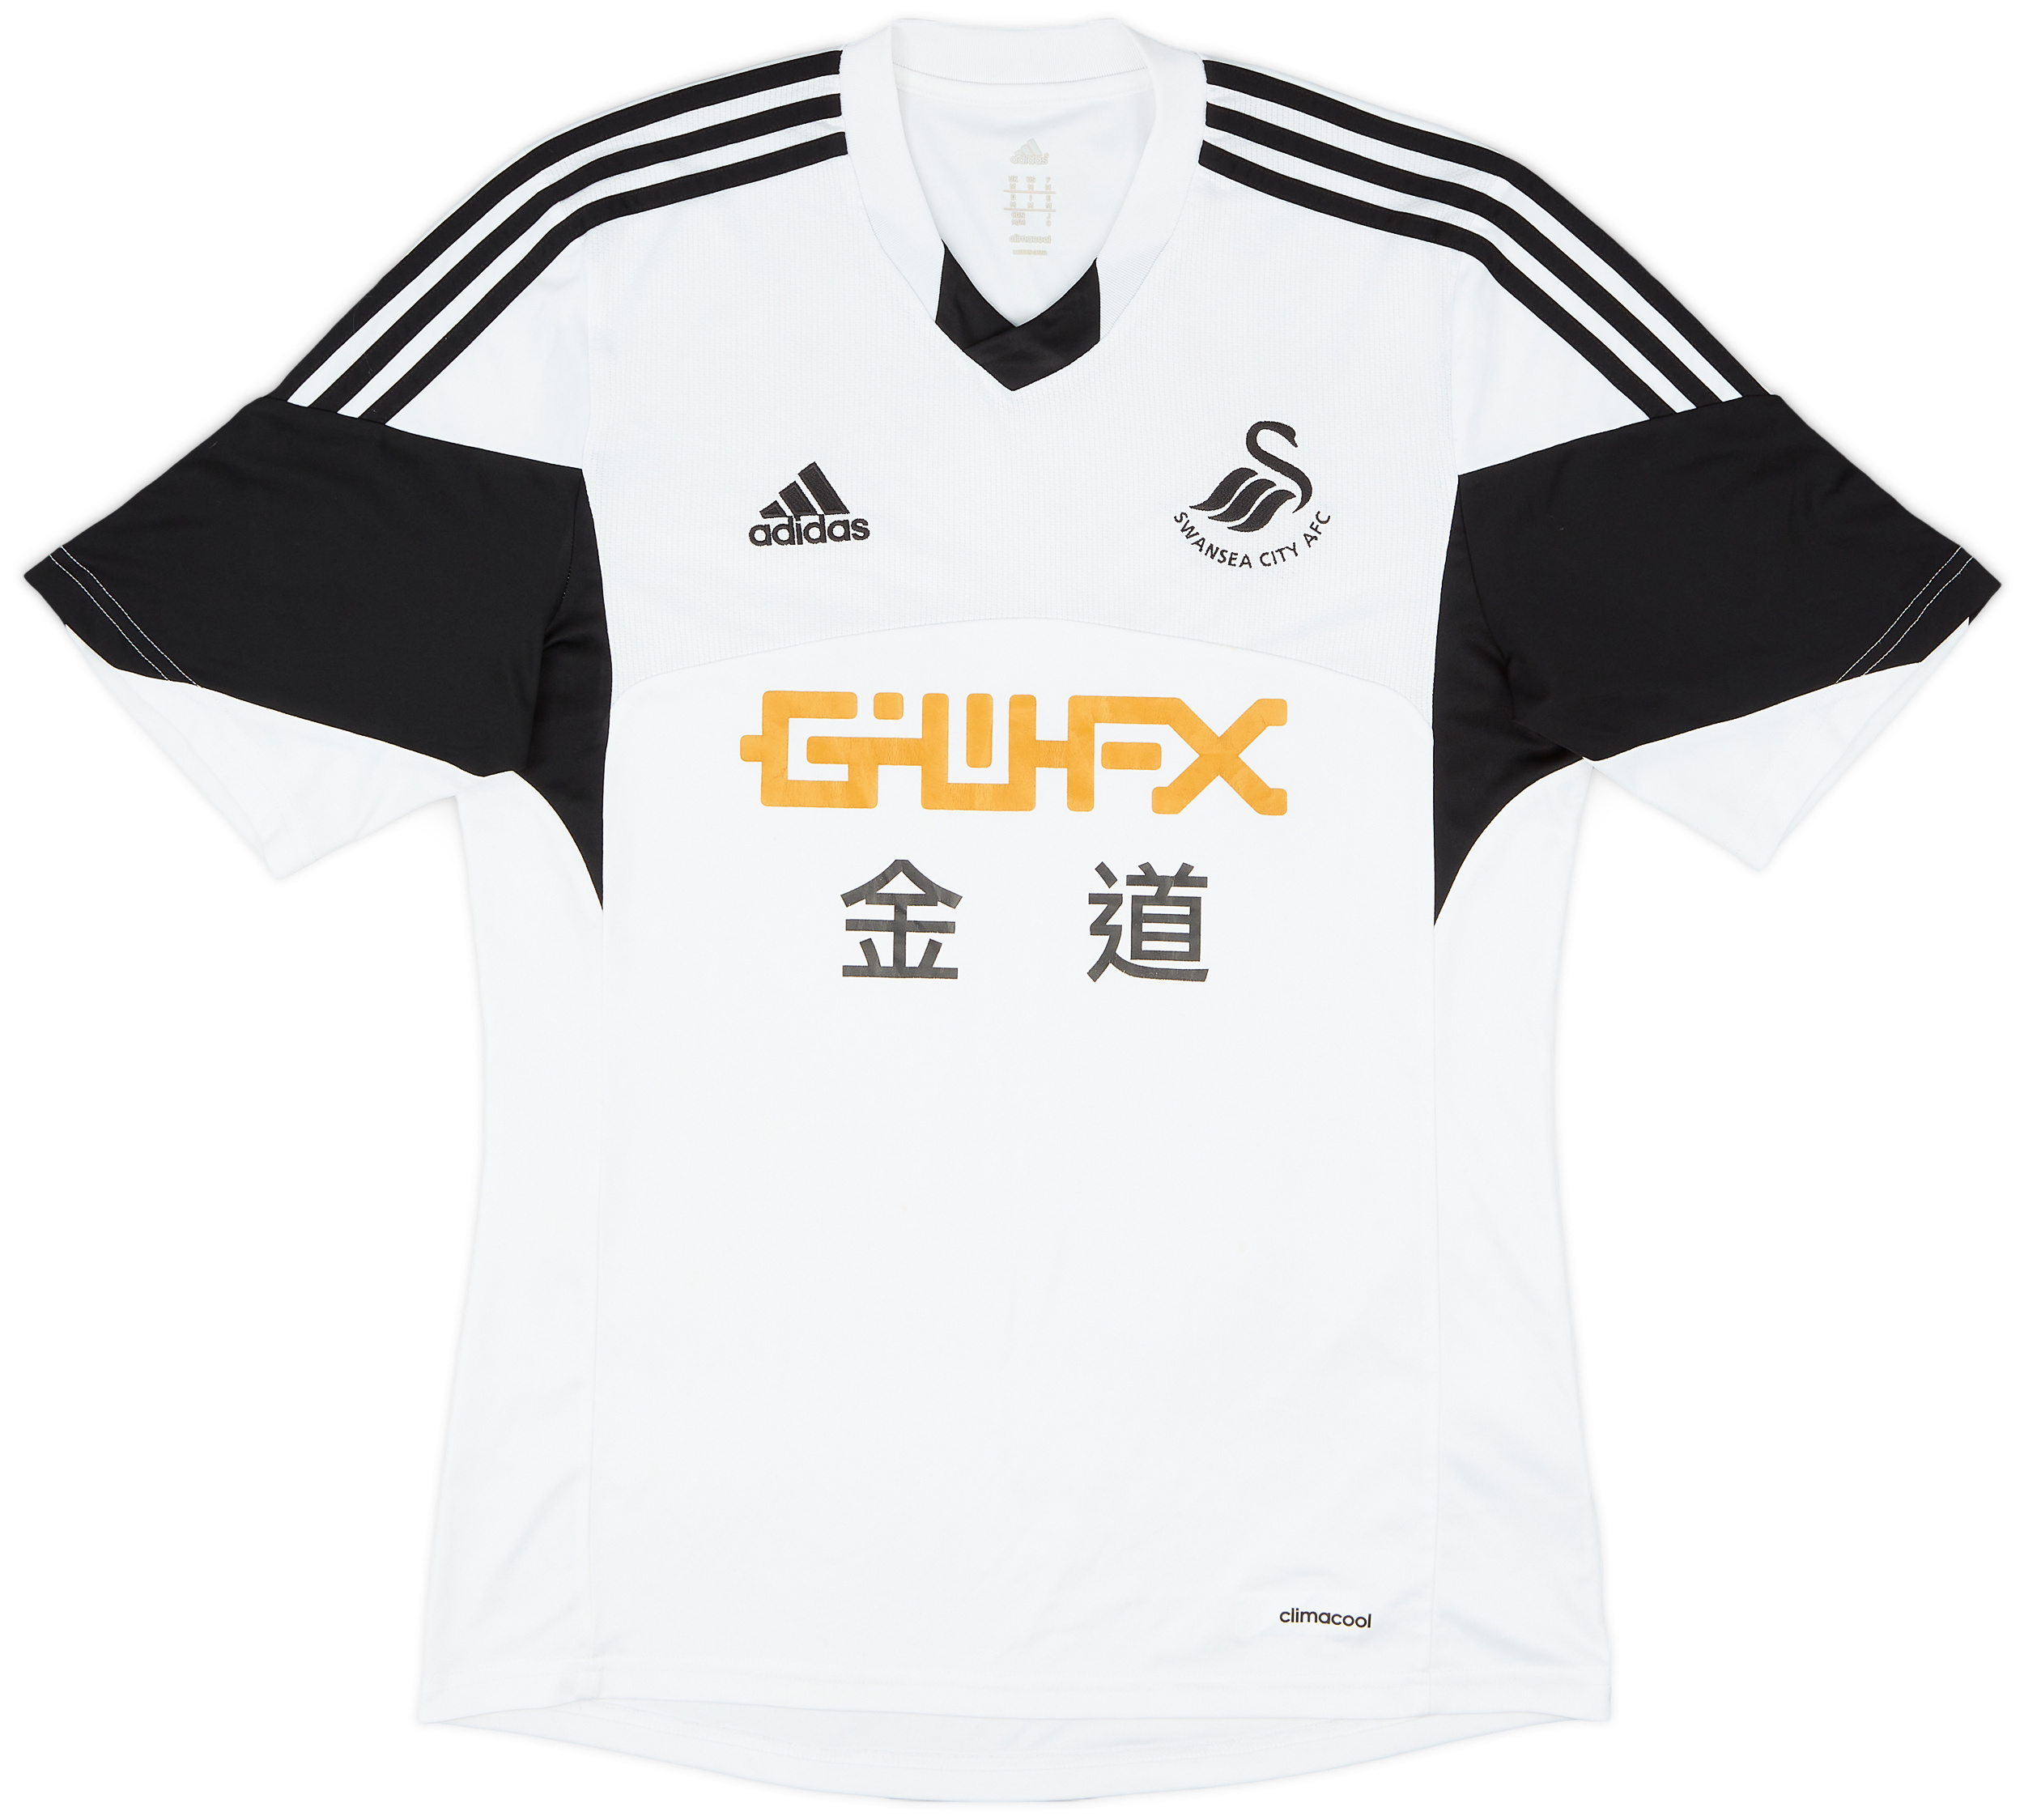 2013-14 Swansea City Home Shirt - 6/10 - ()